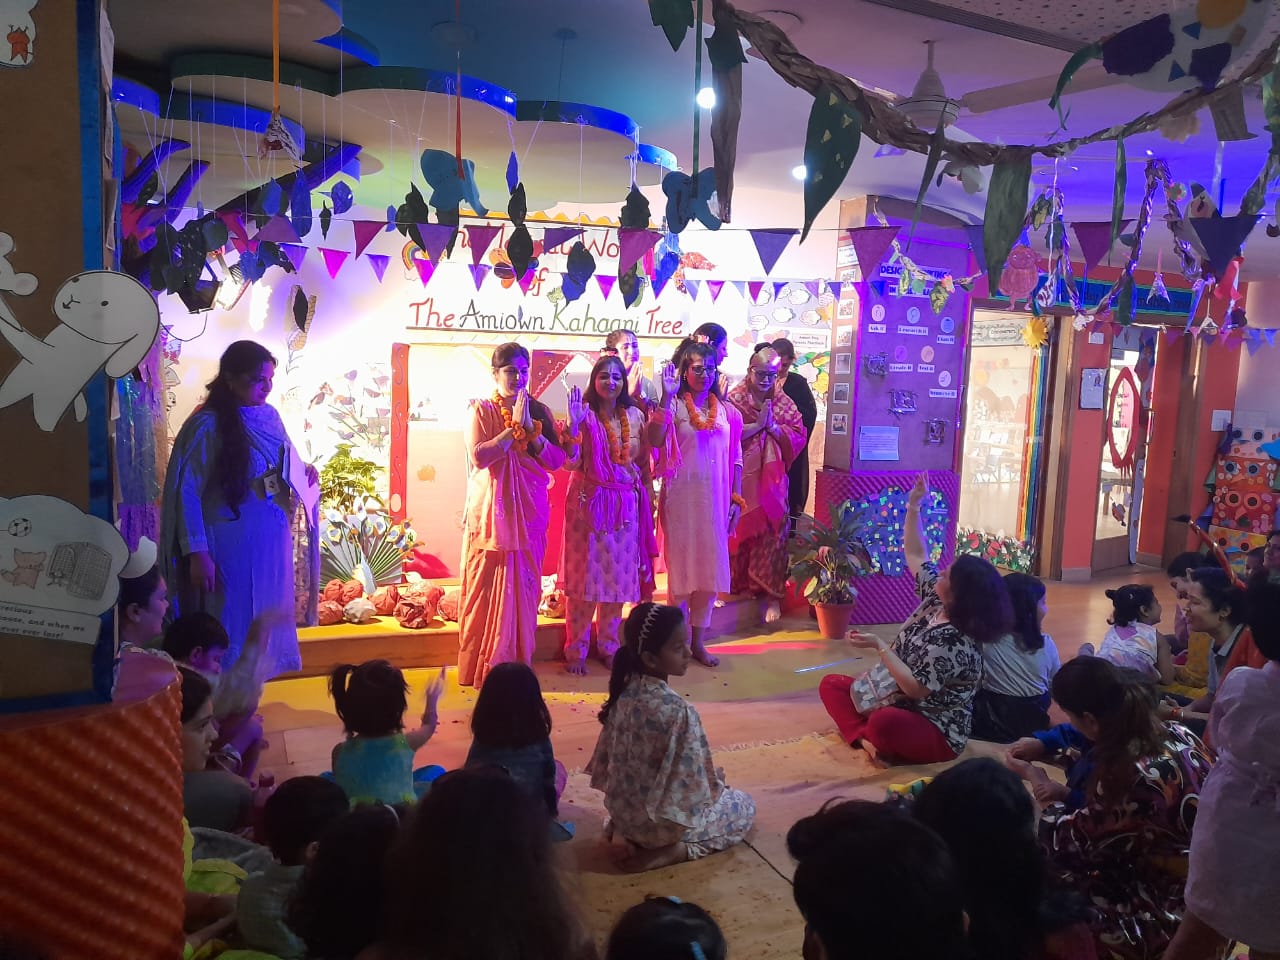 Amiown: The Best Caring Preschool in Delhi, Gurgaon, Noida, Ghaziabad